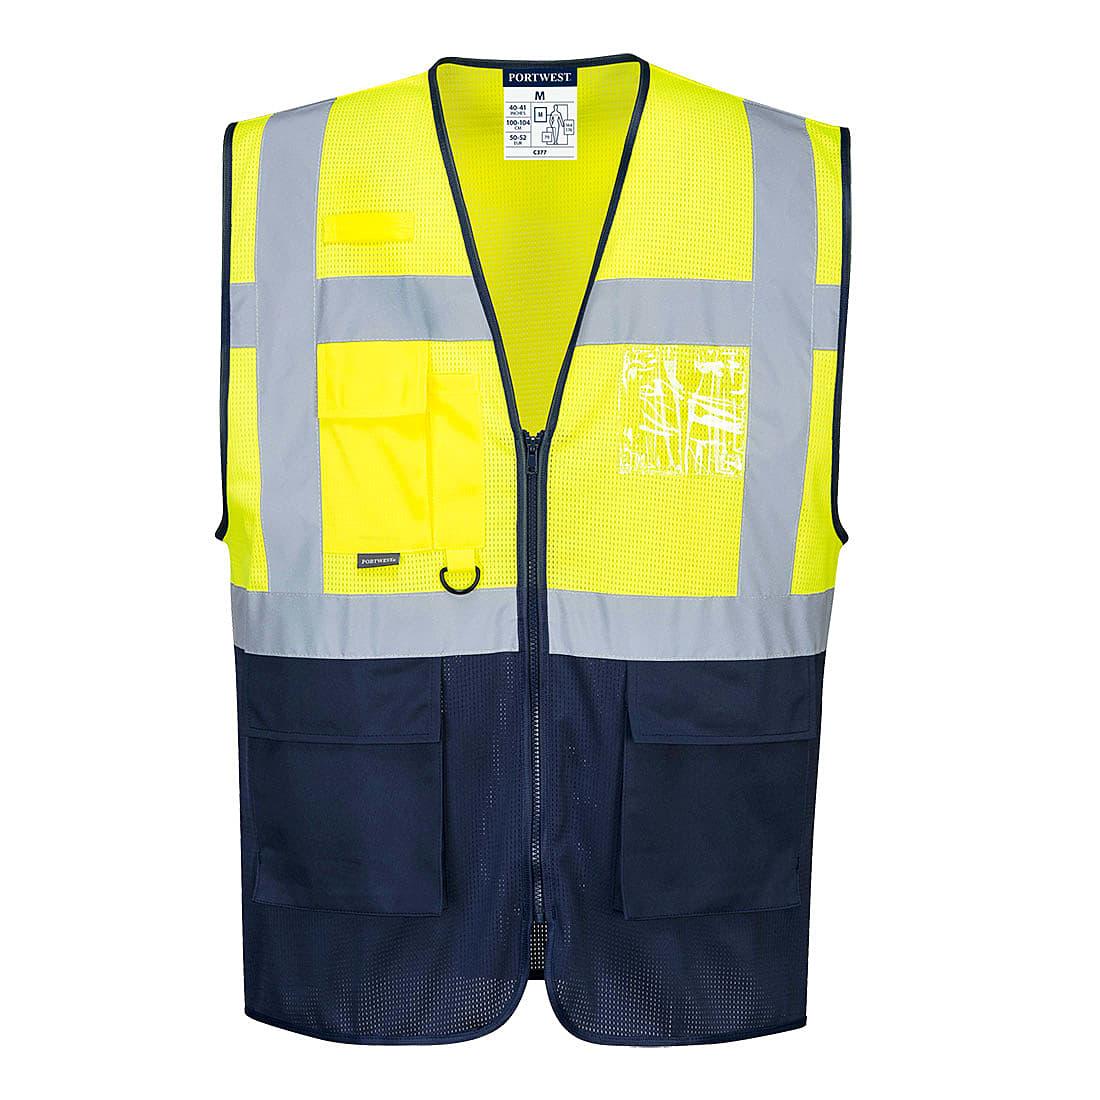 Portwest Hi-Viz Two Tone MeshAir Executive Vest in Yellow / Navy (Product Code: C377)